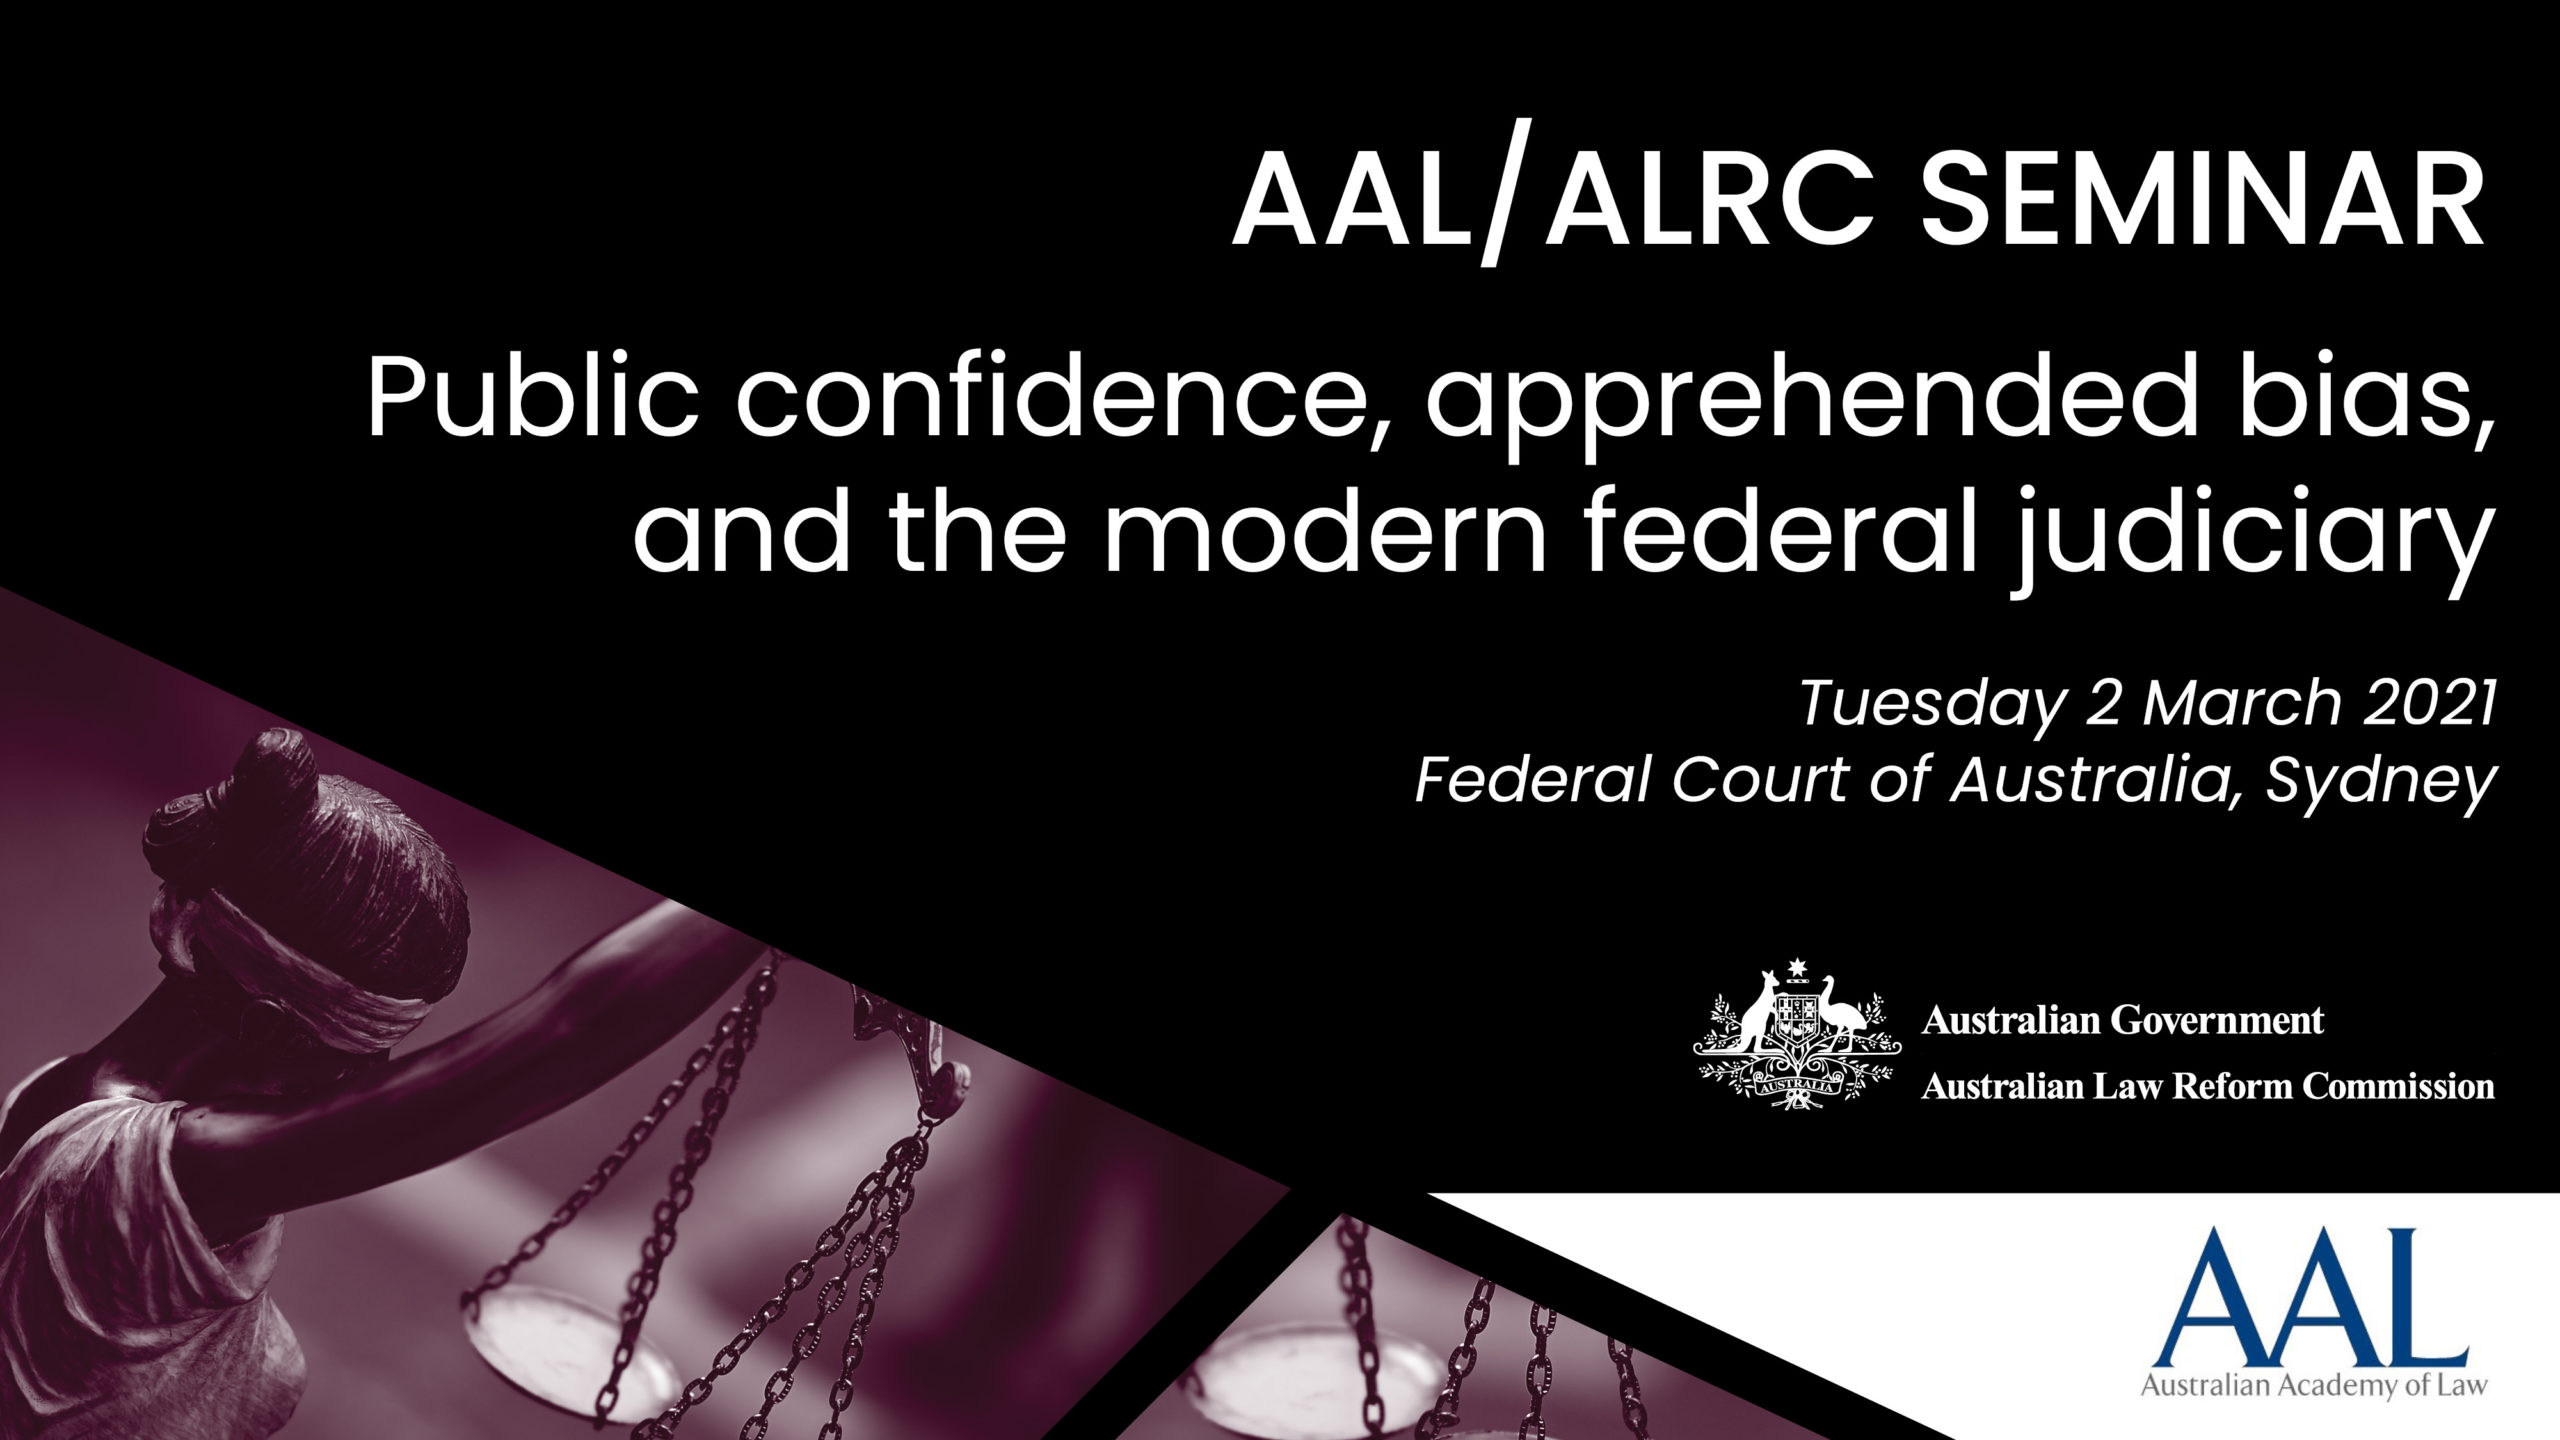 AAL/ALRC Seminar title slide